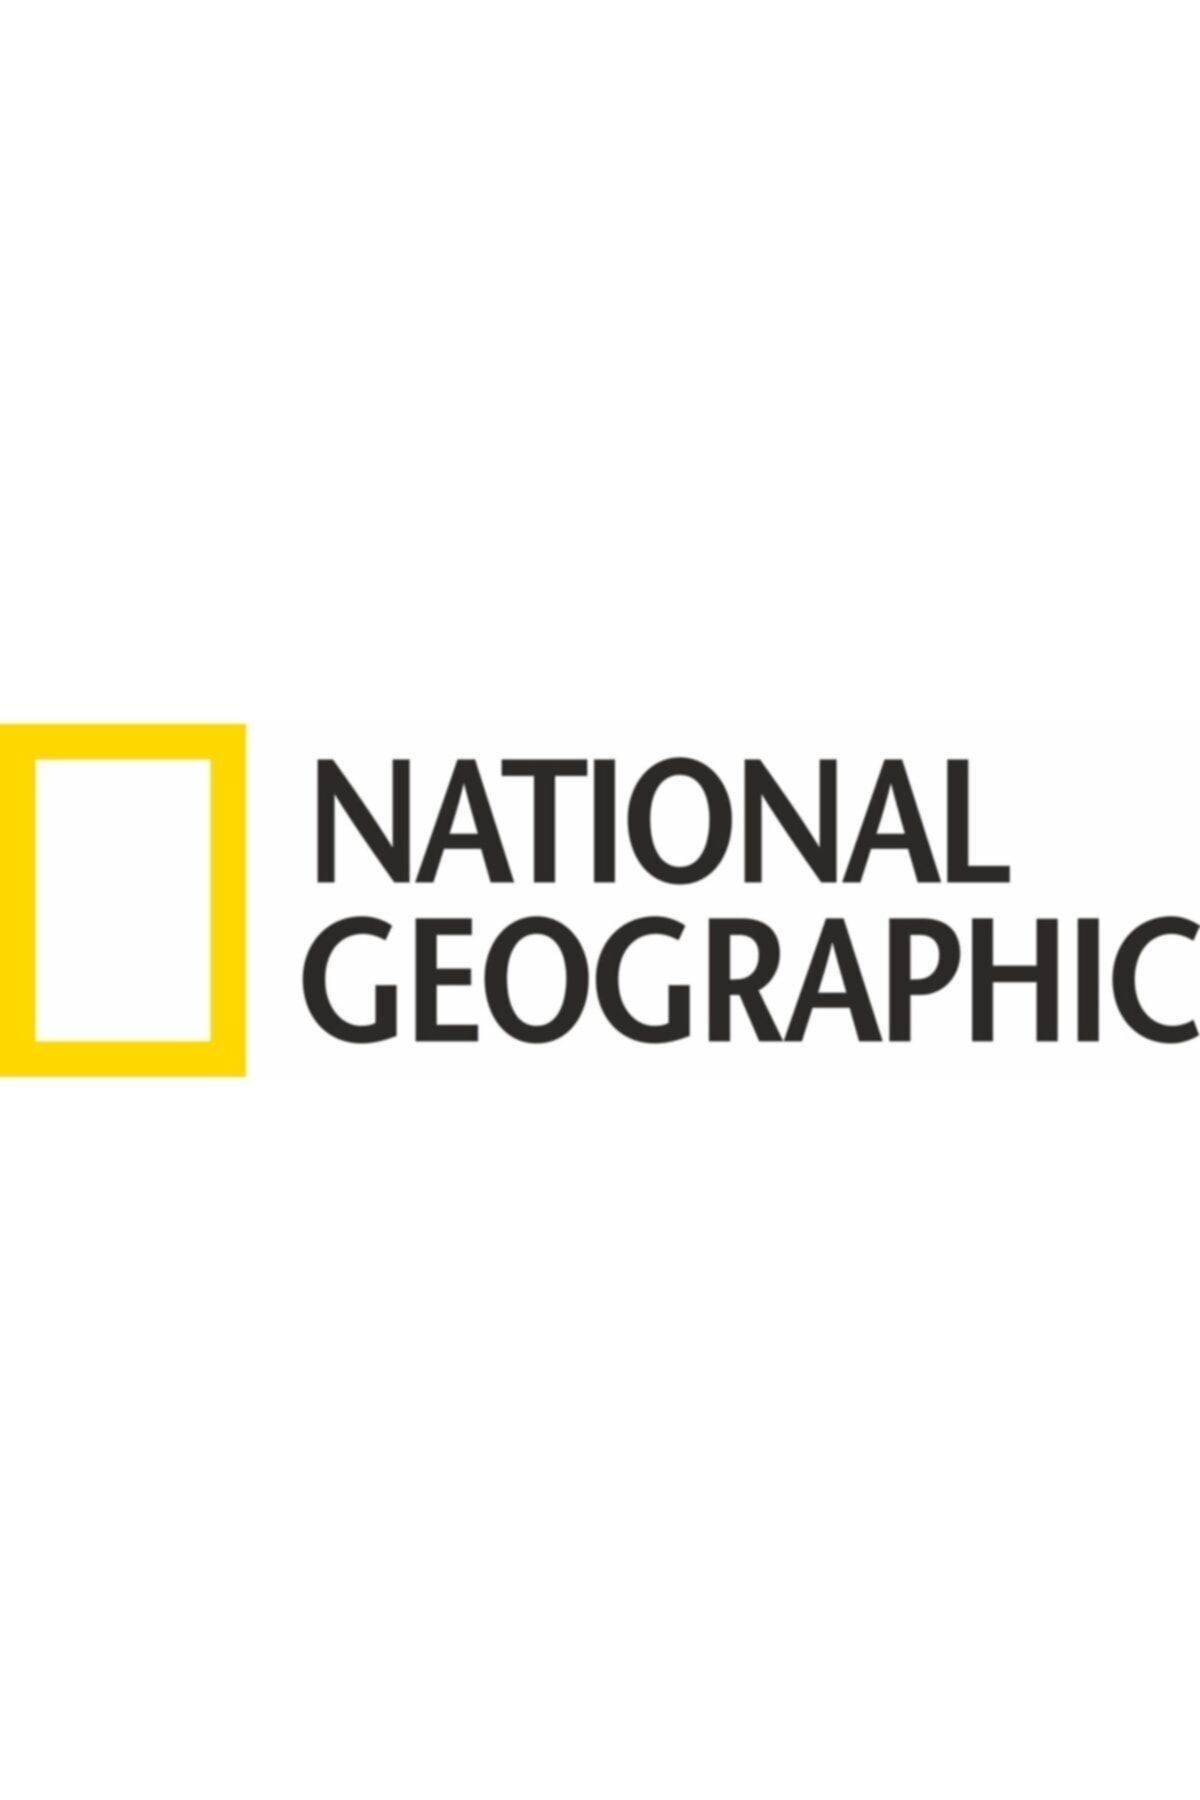 Sticker Fabrikası National Geographic Logo 4x4 Offroad Off Road Adventure Camping Sticker  00865   50x14 cm